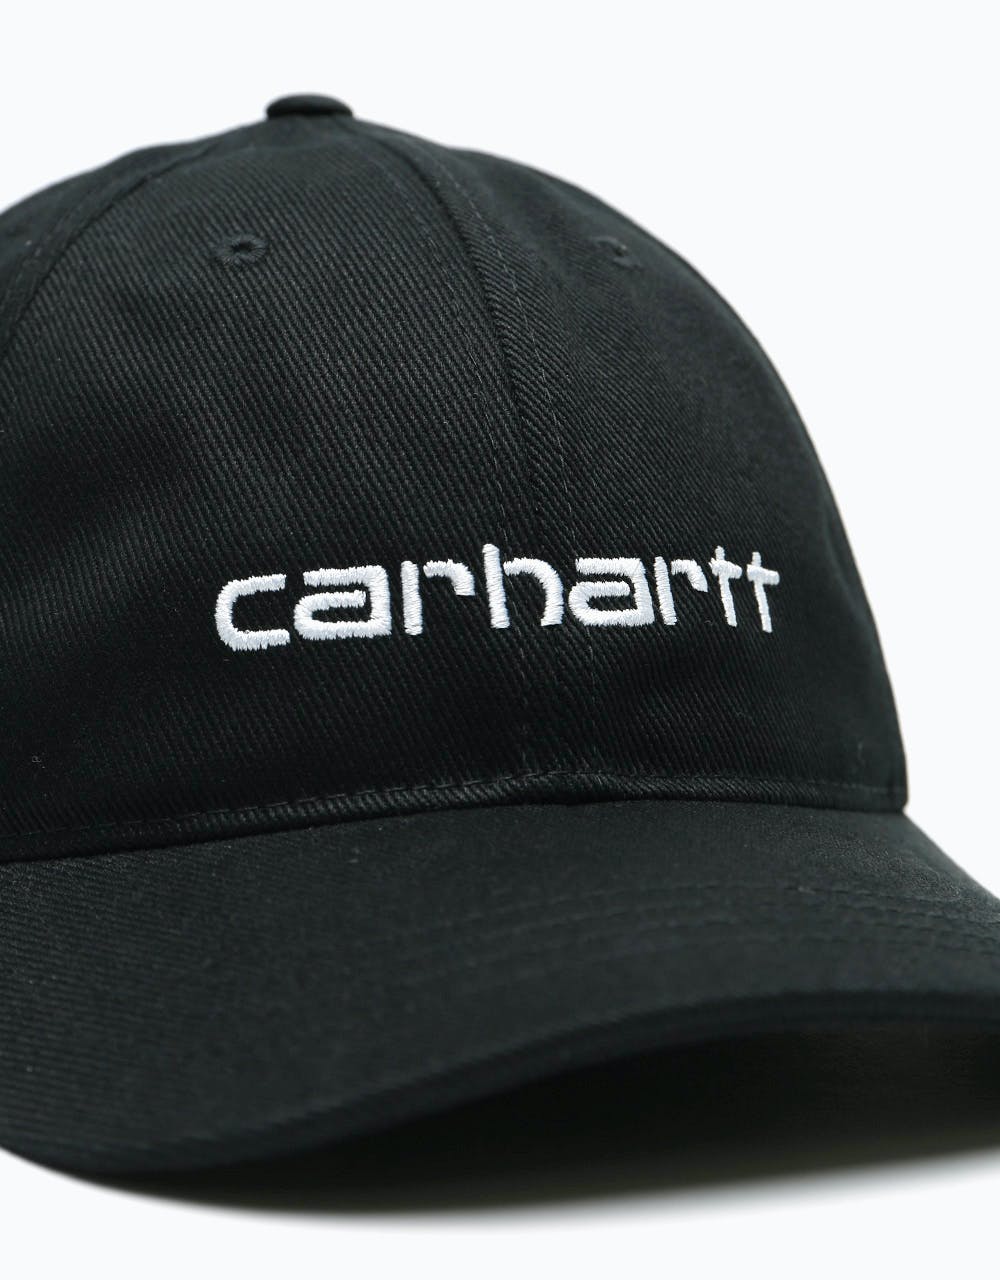 Carhartt WIP Carter Strapback Cap - Black/White